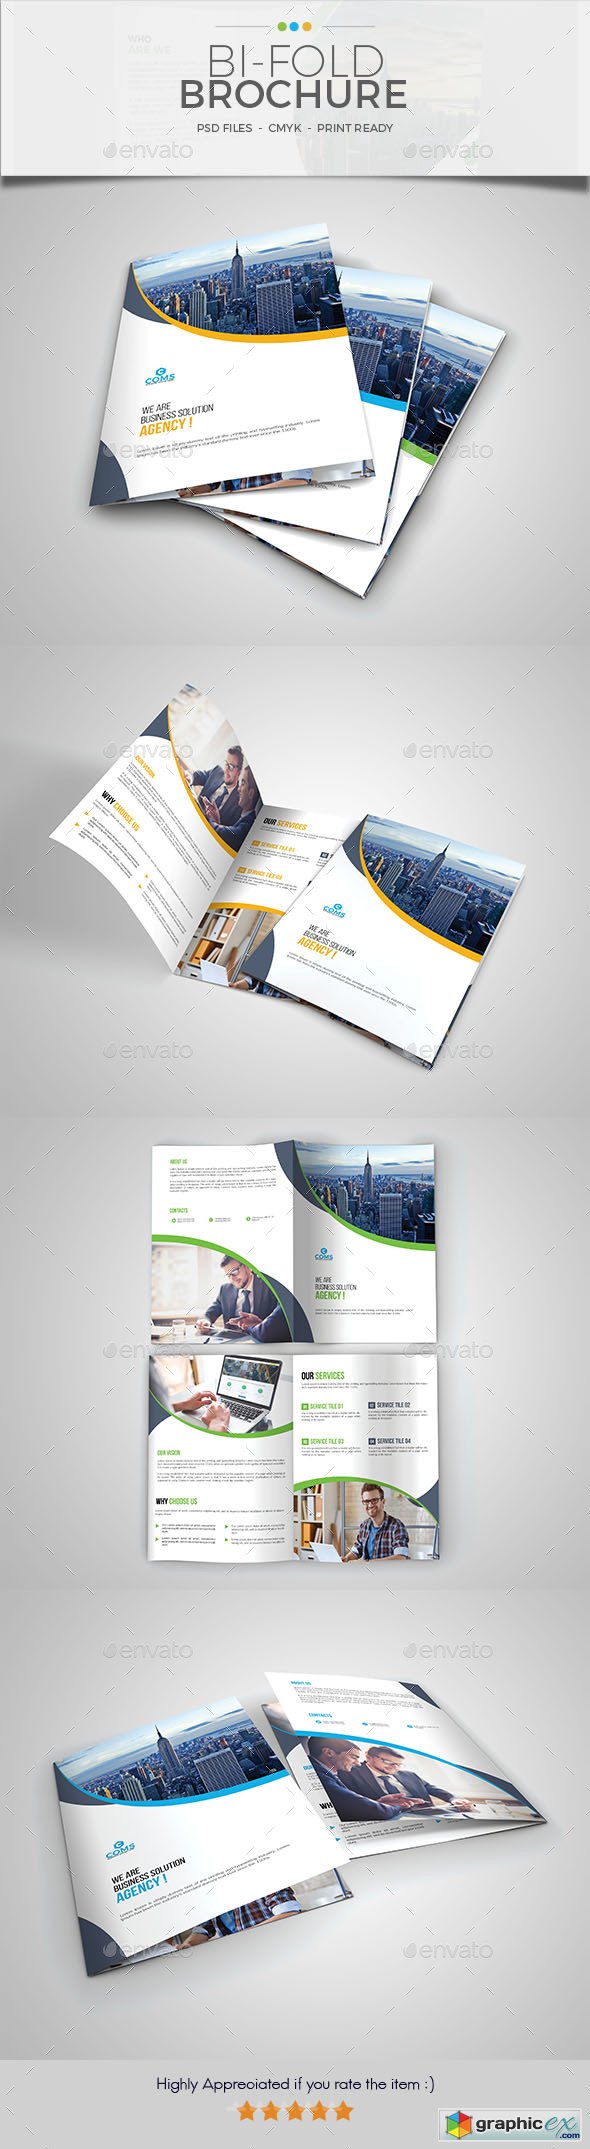 Corporate Bifold Brochure Template 01